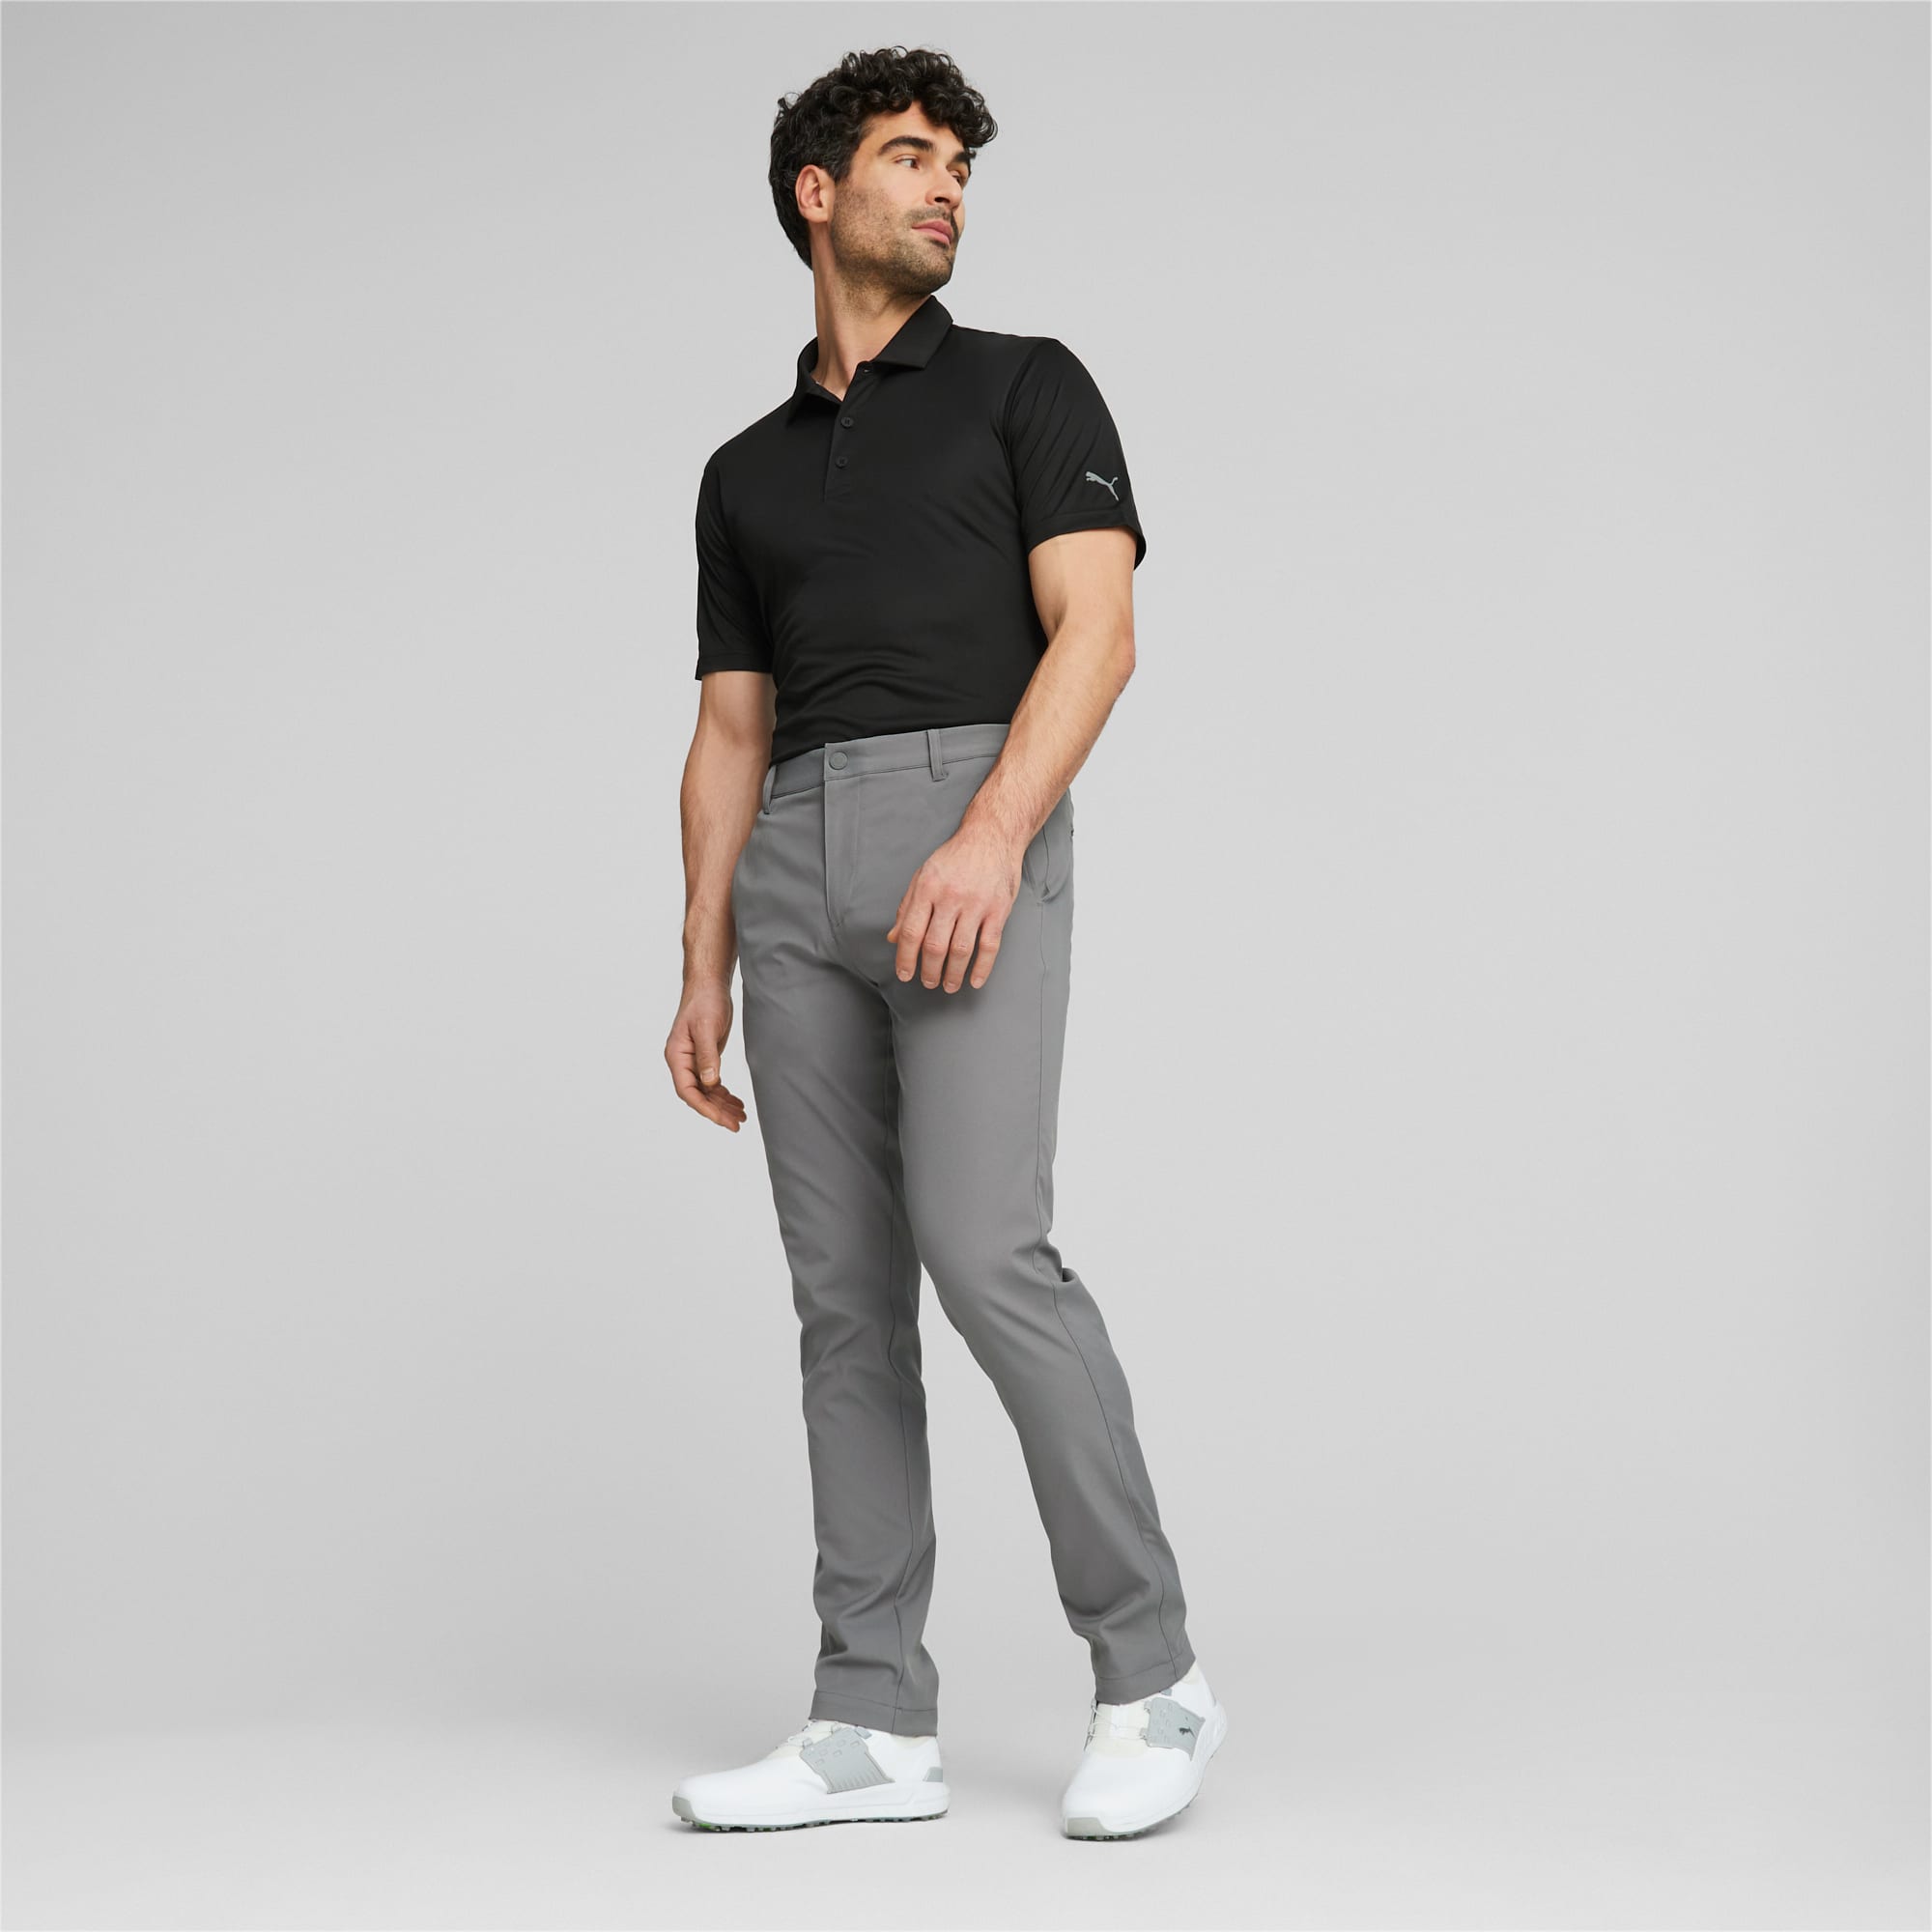 PUMA Dealer Tailored Golf Pants Men, Slate Sky, Size 33/34, Clothing